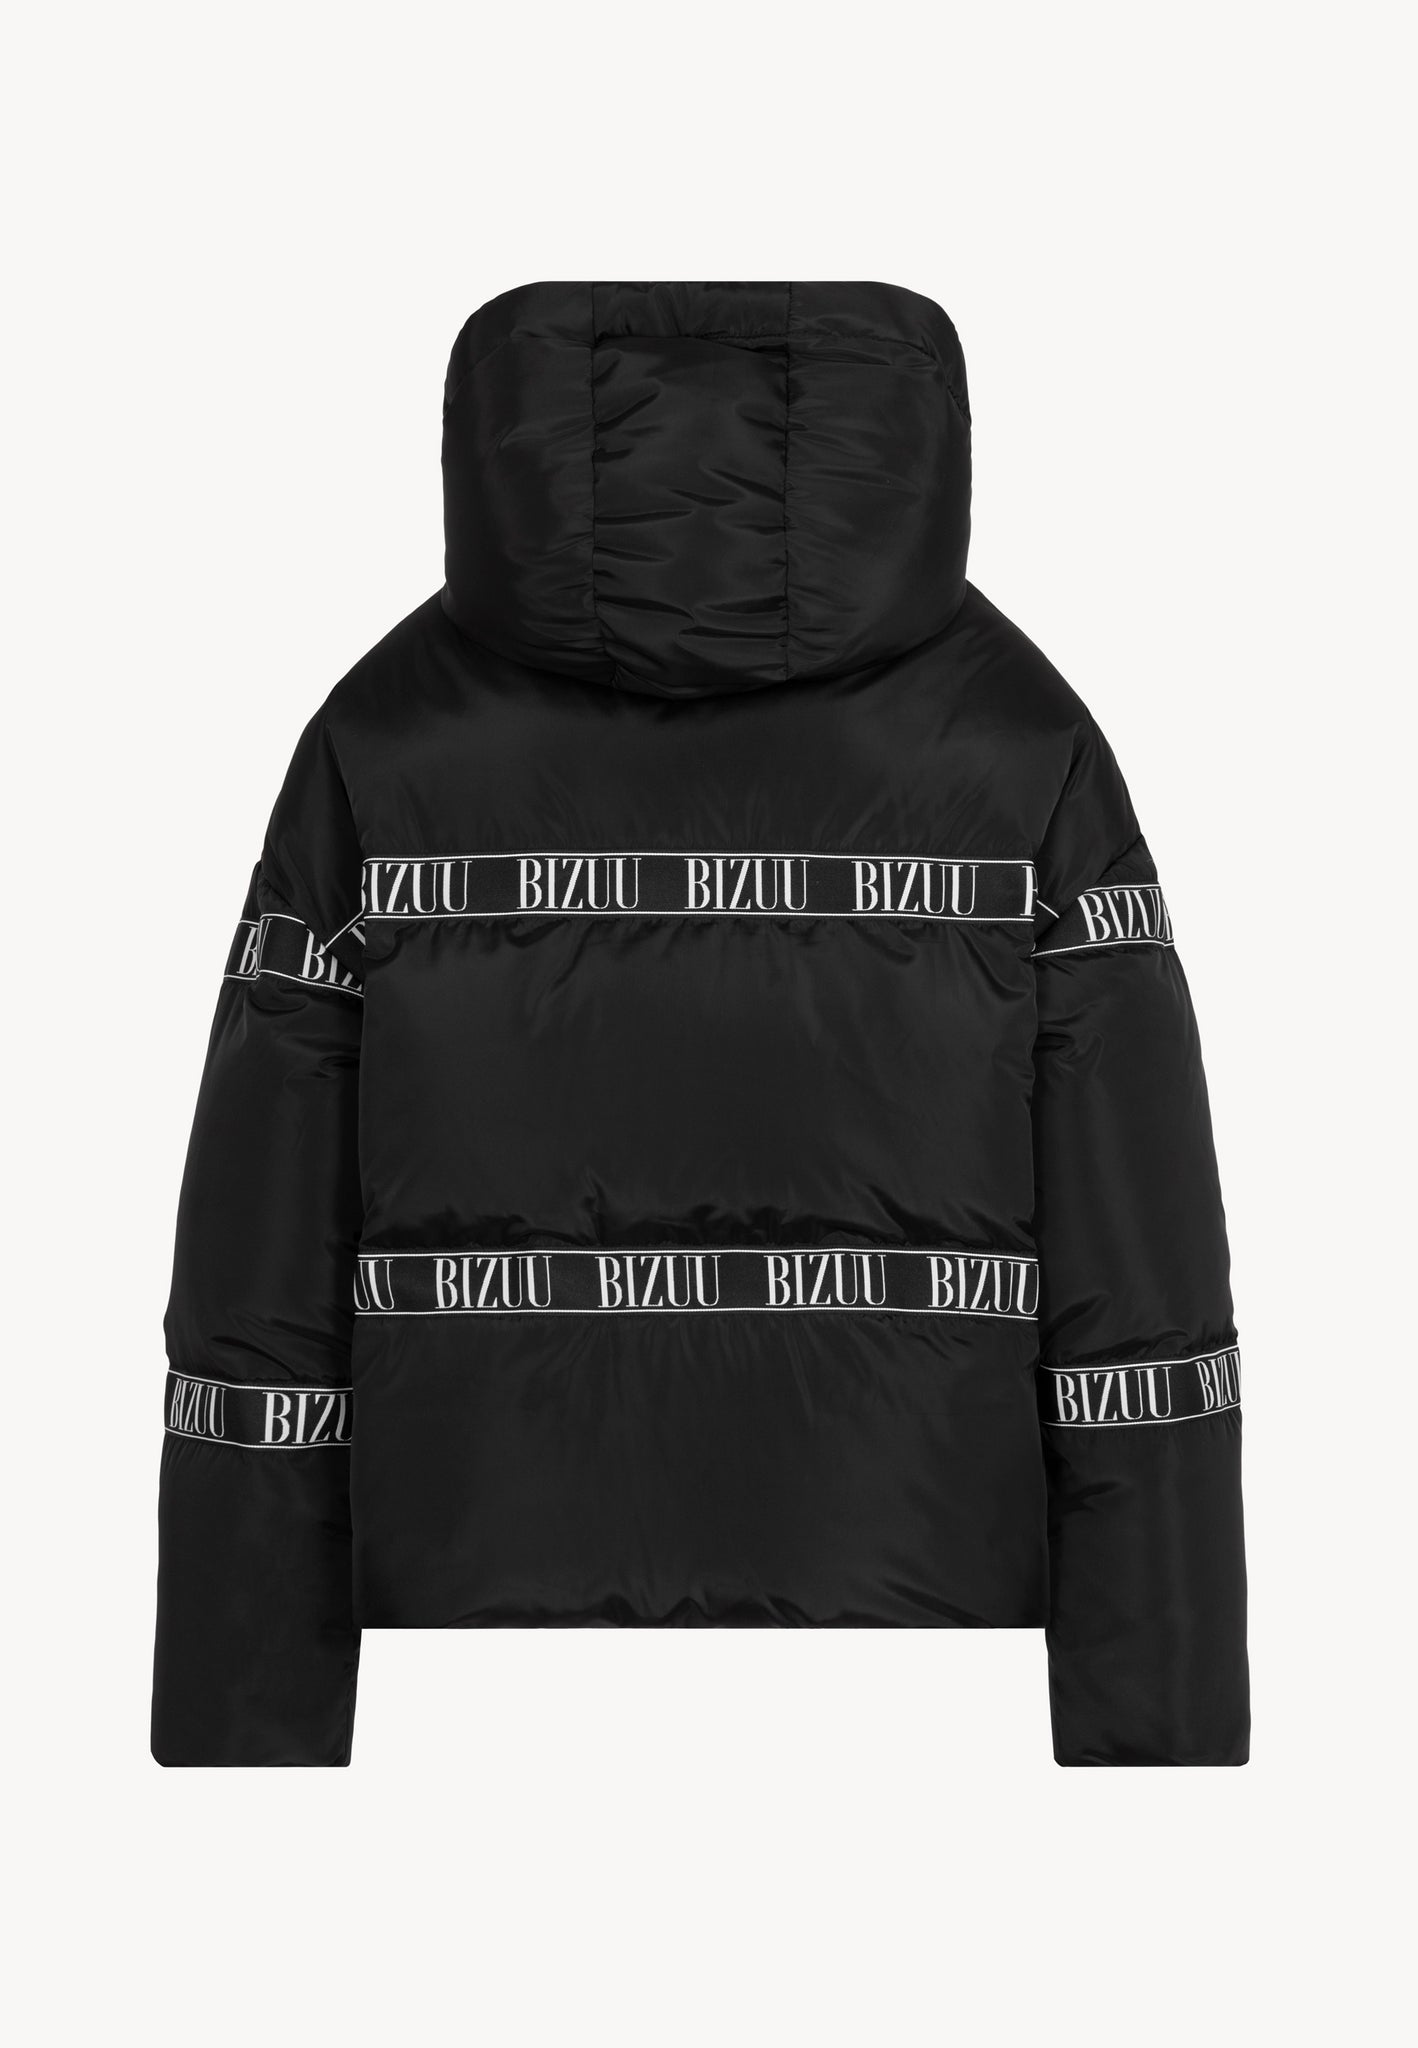 TOKYO oversized down jacket, black – Bizuu